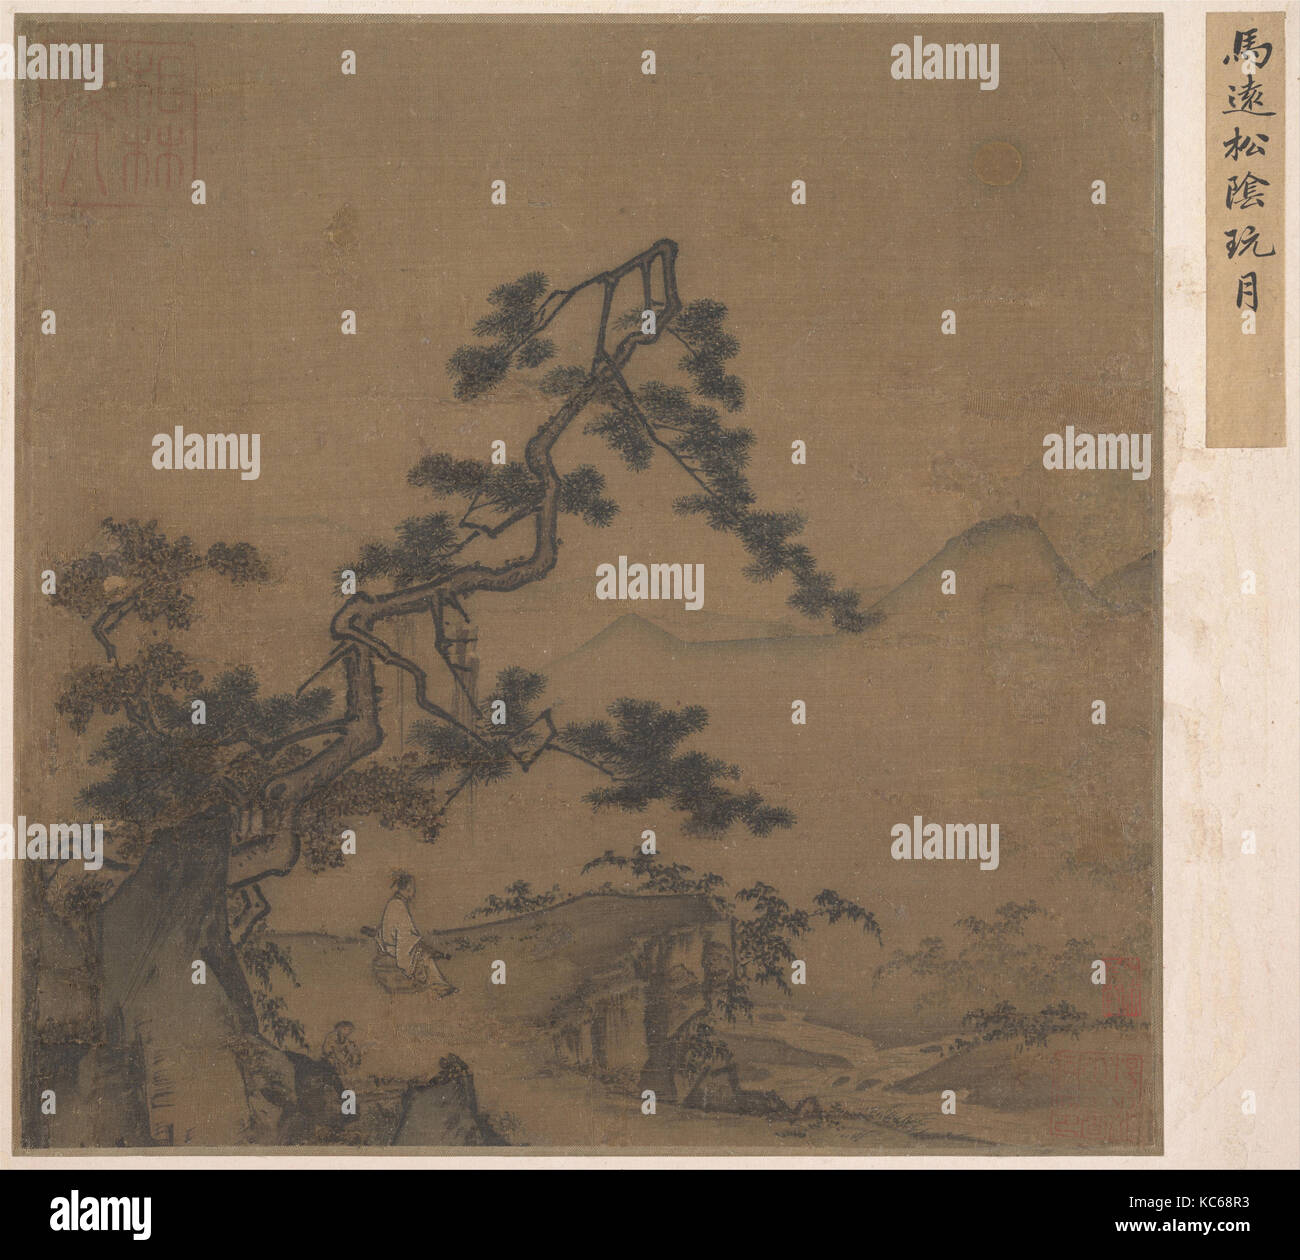 南宋  佚名  倣馬遠  松陰玩月圖  冊頁, Viewing the Moon under a Pine Tree, After Ma Yuan, early 13th century Stock Photo